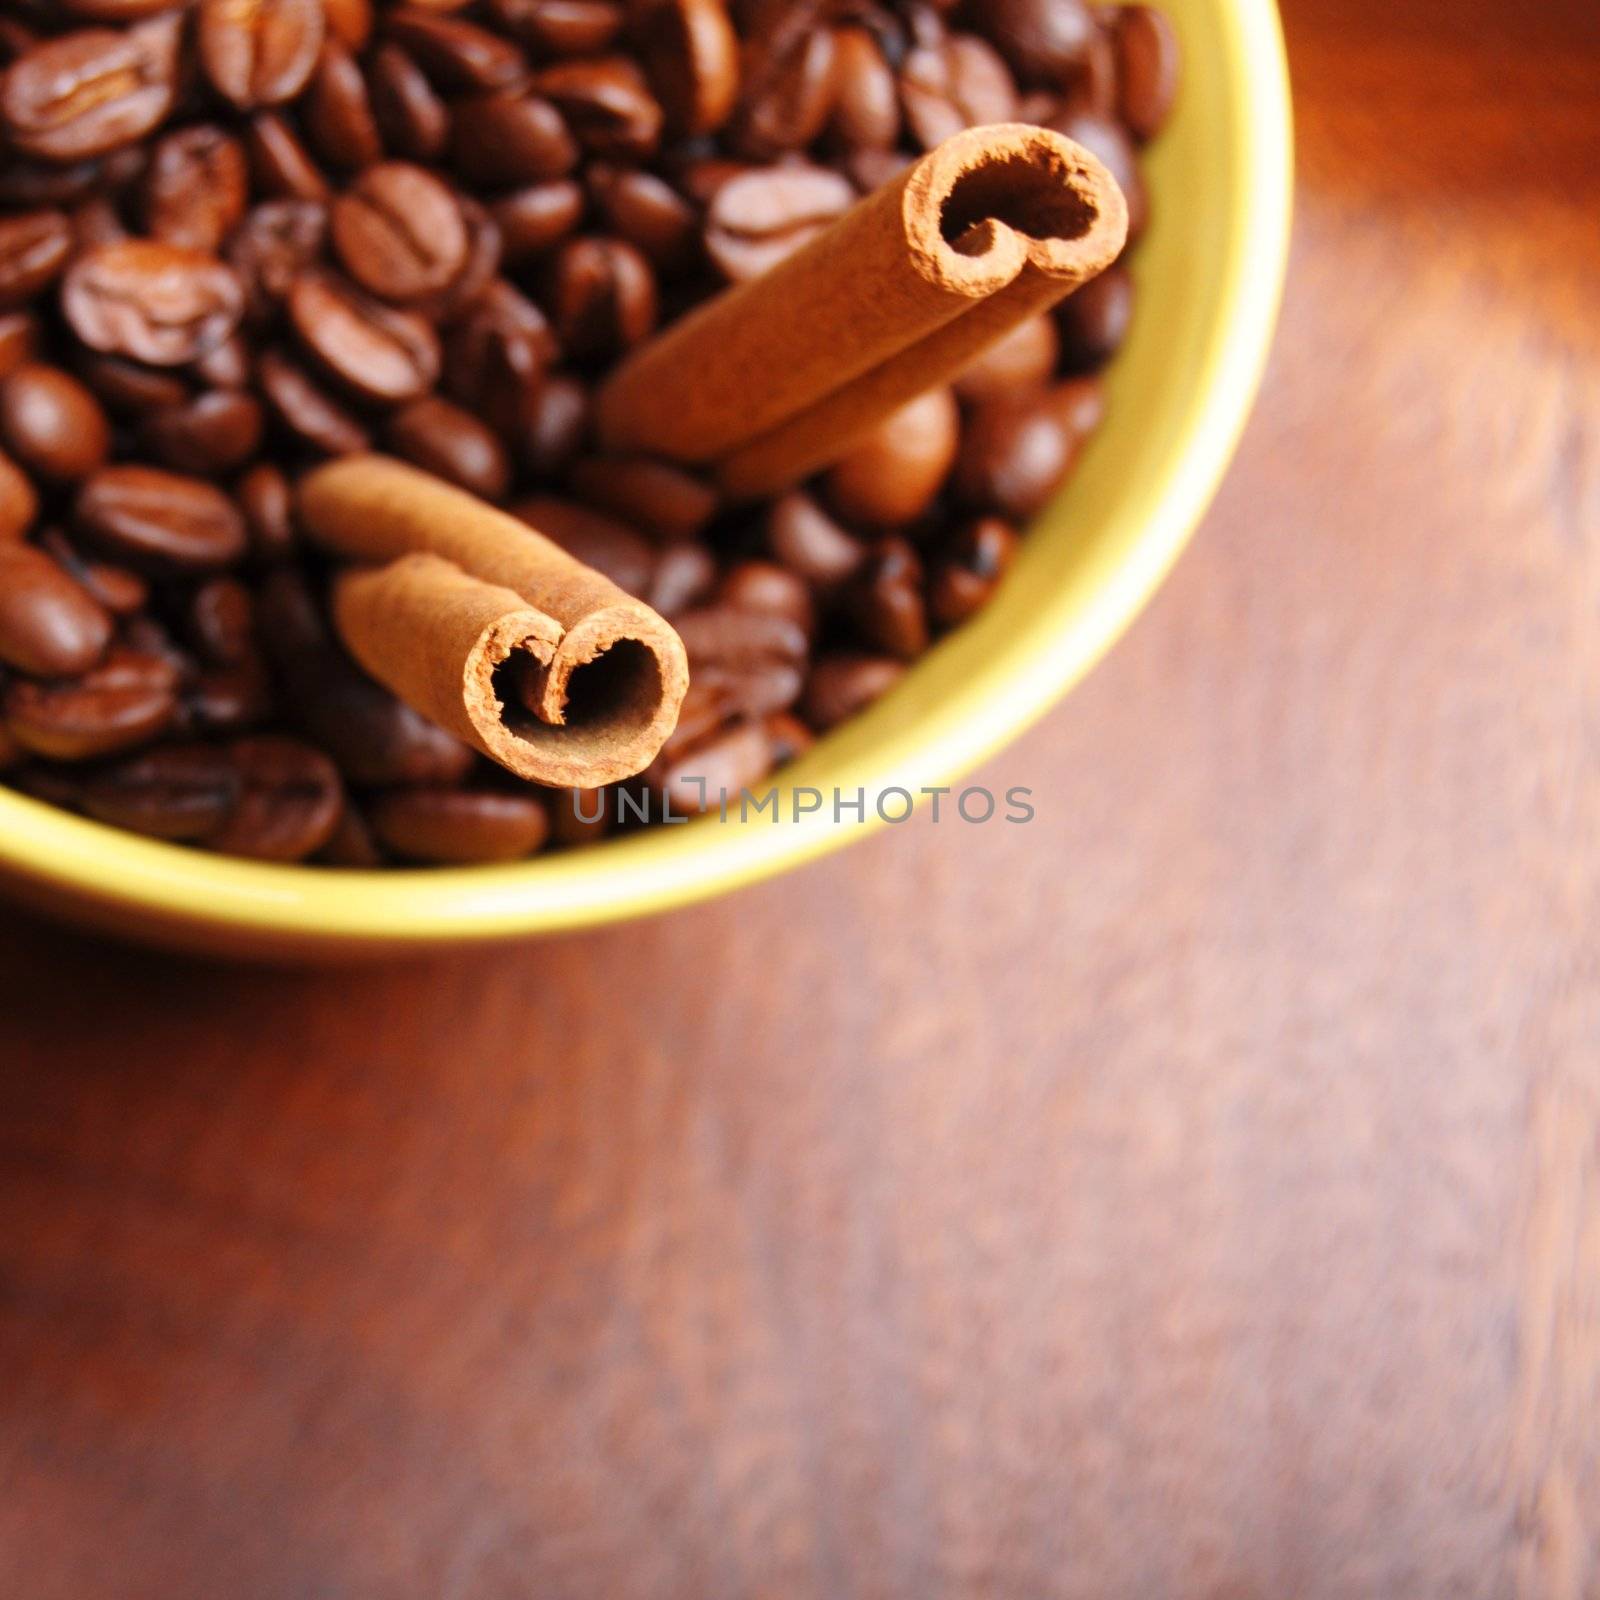 coffee and cinnamon by gunnar3000